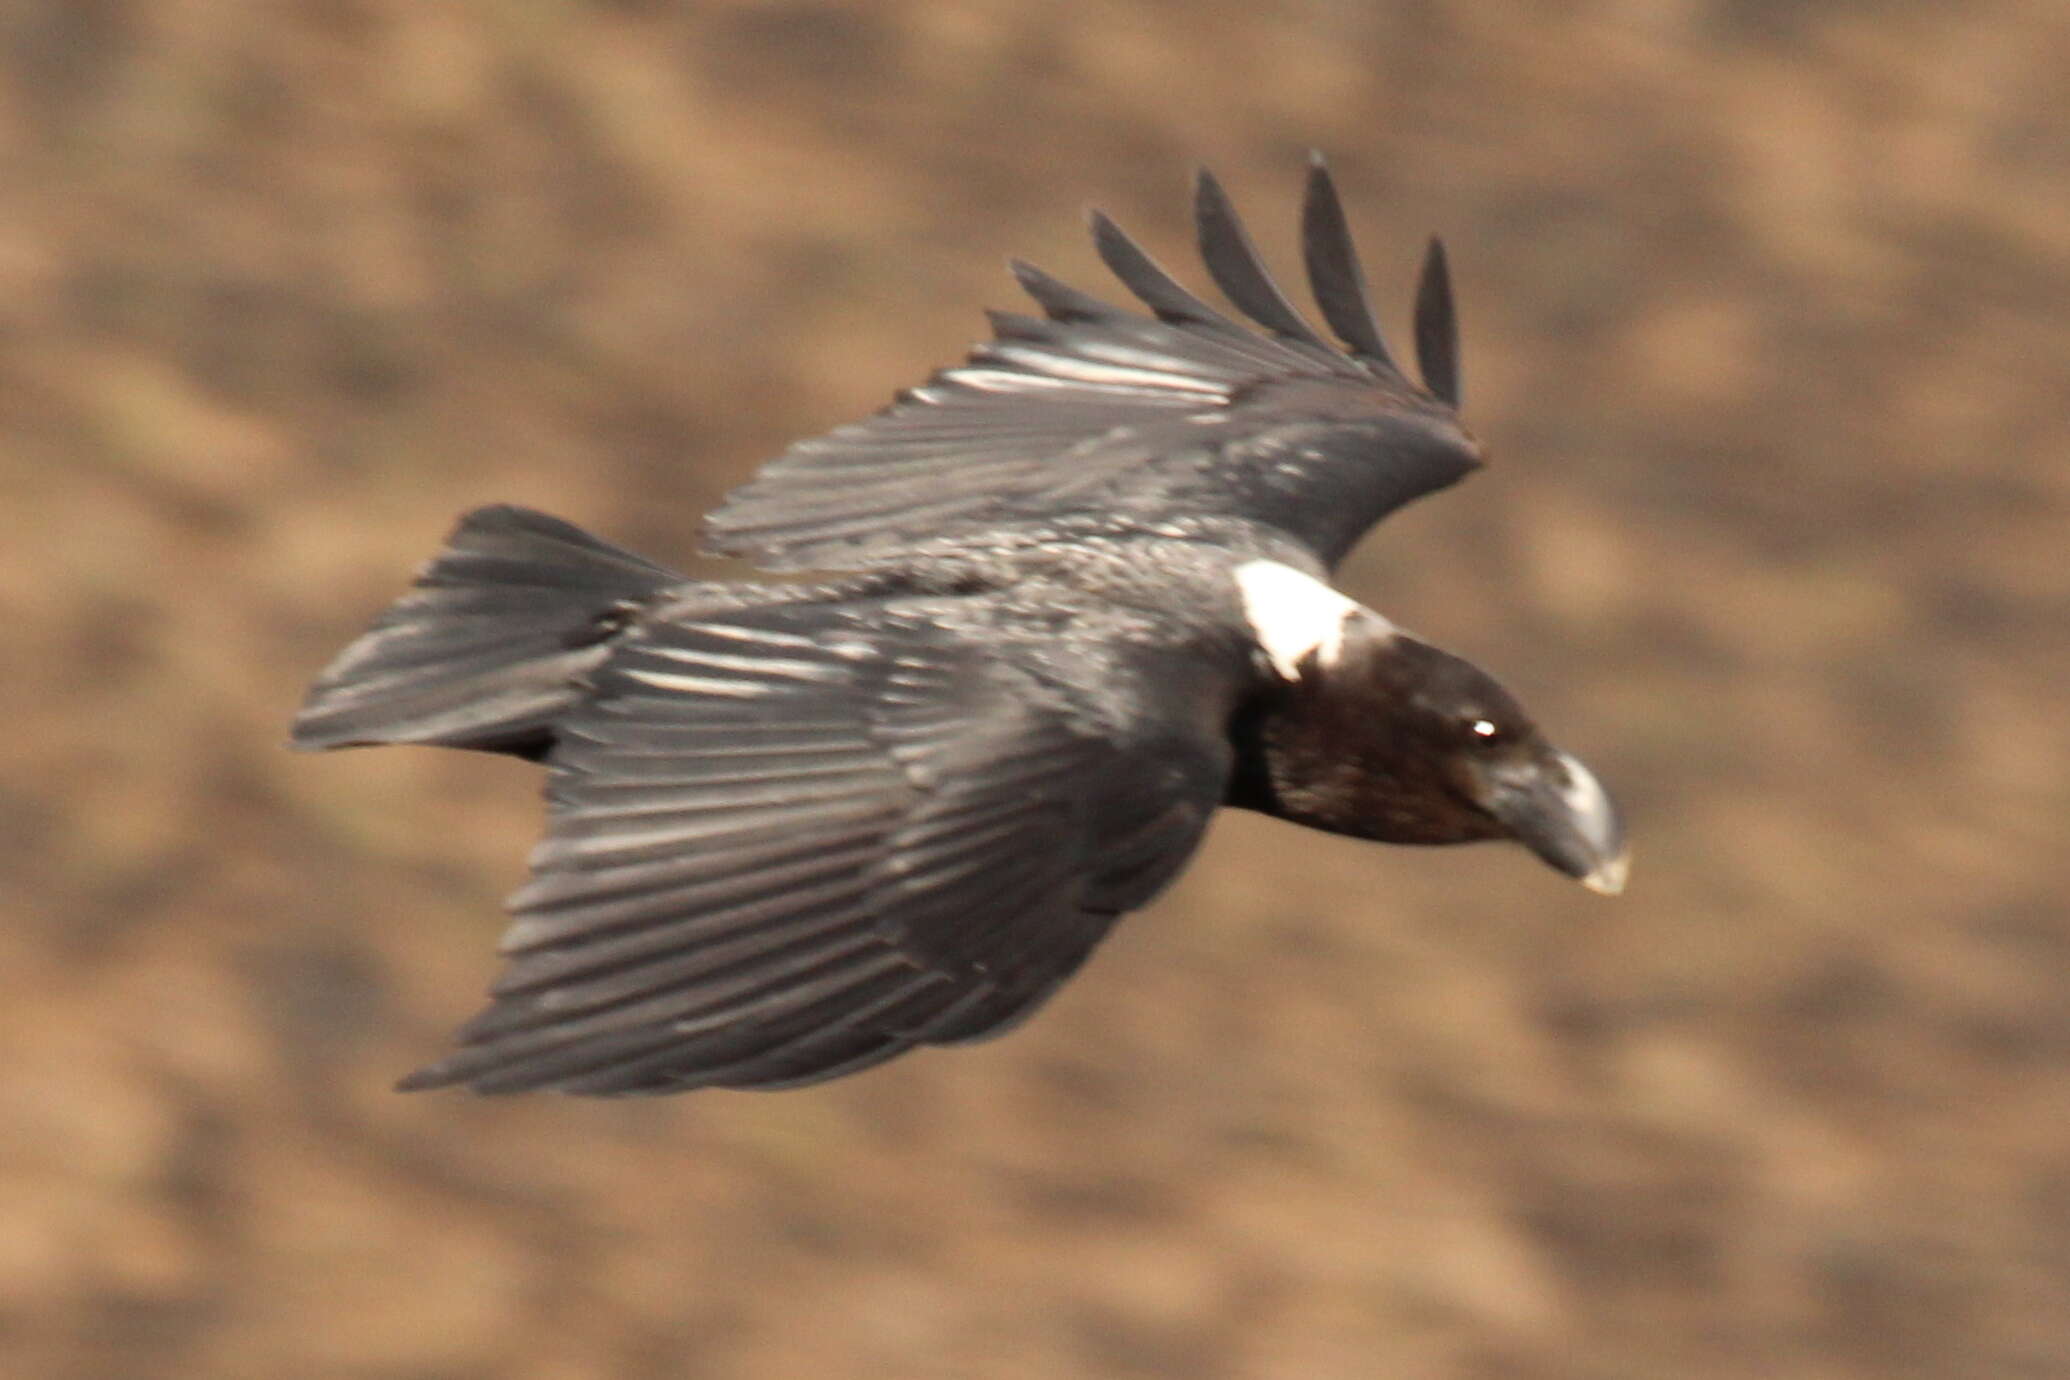 Image of White-necked Raven